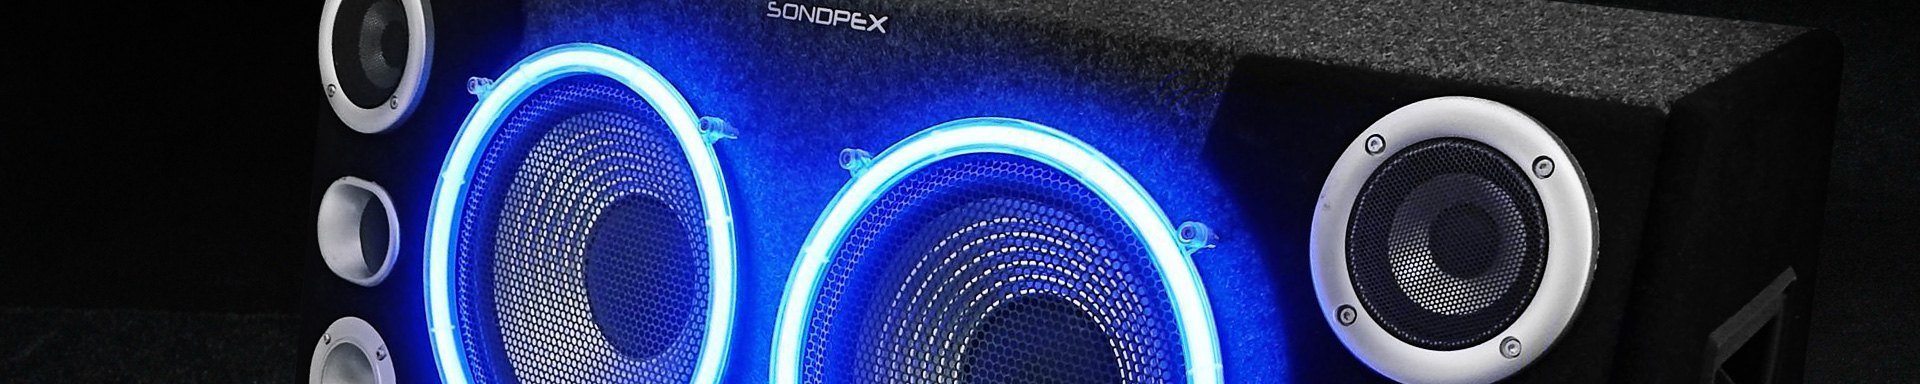 Sondpex Speakers